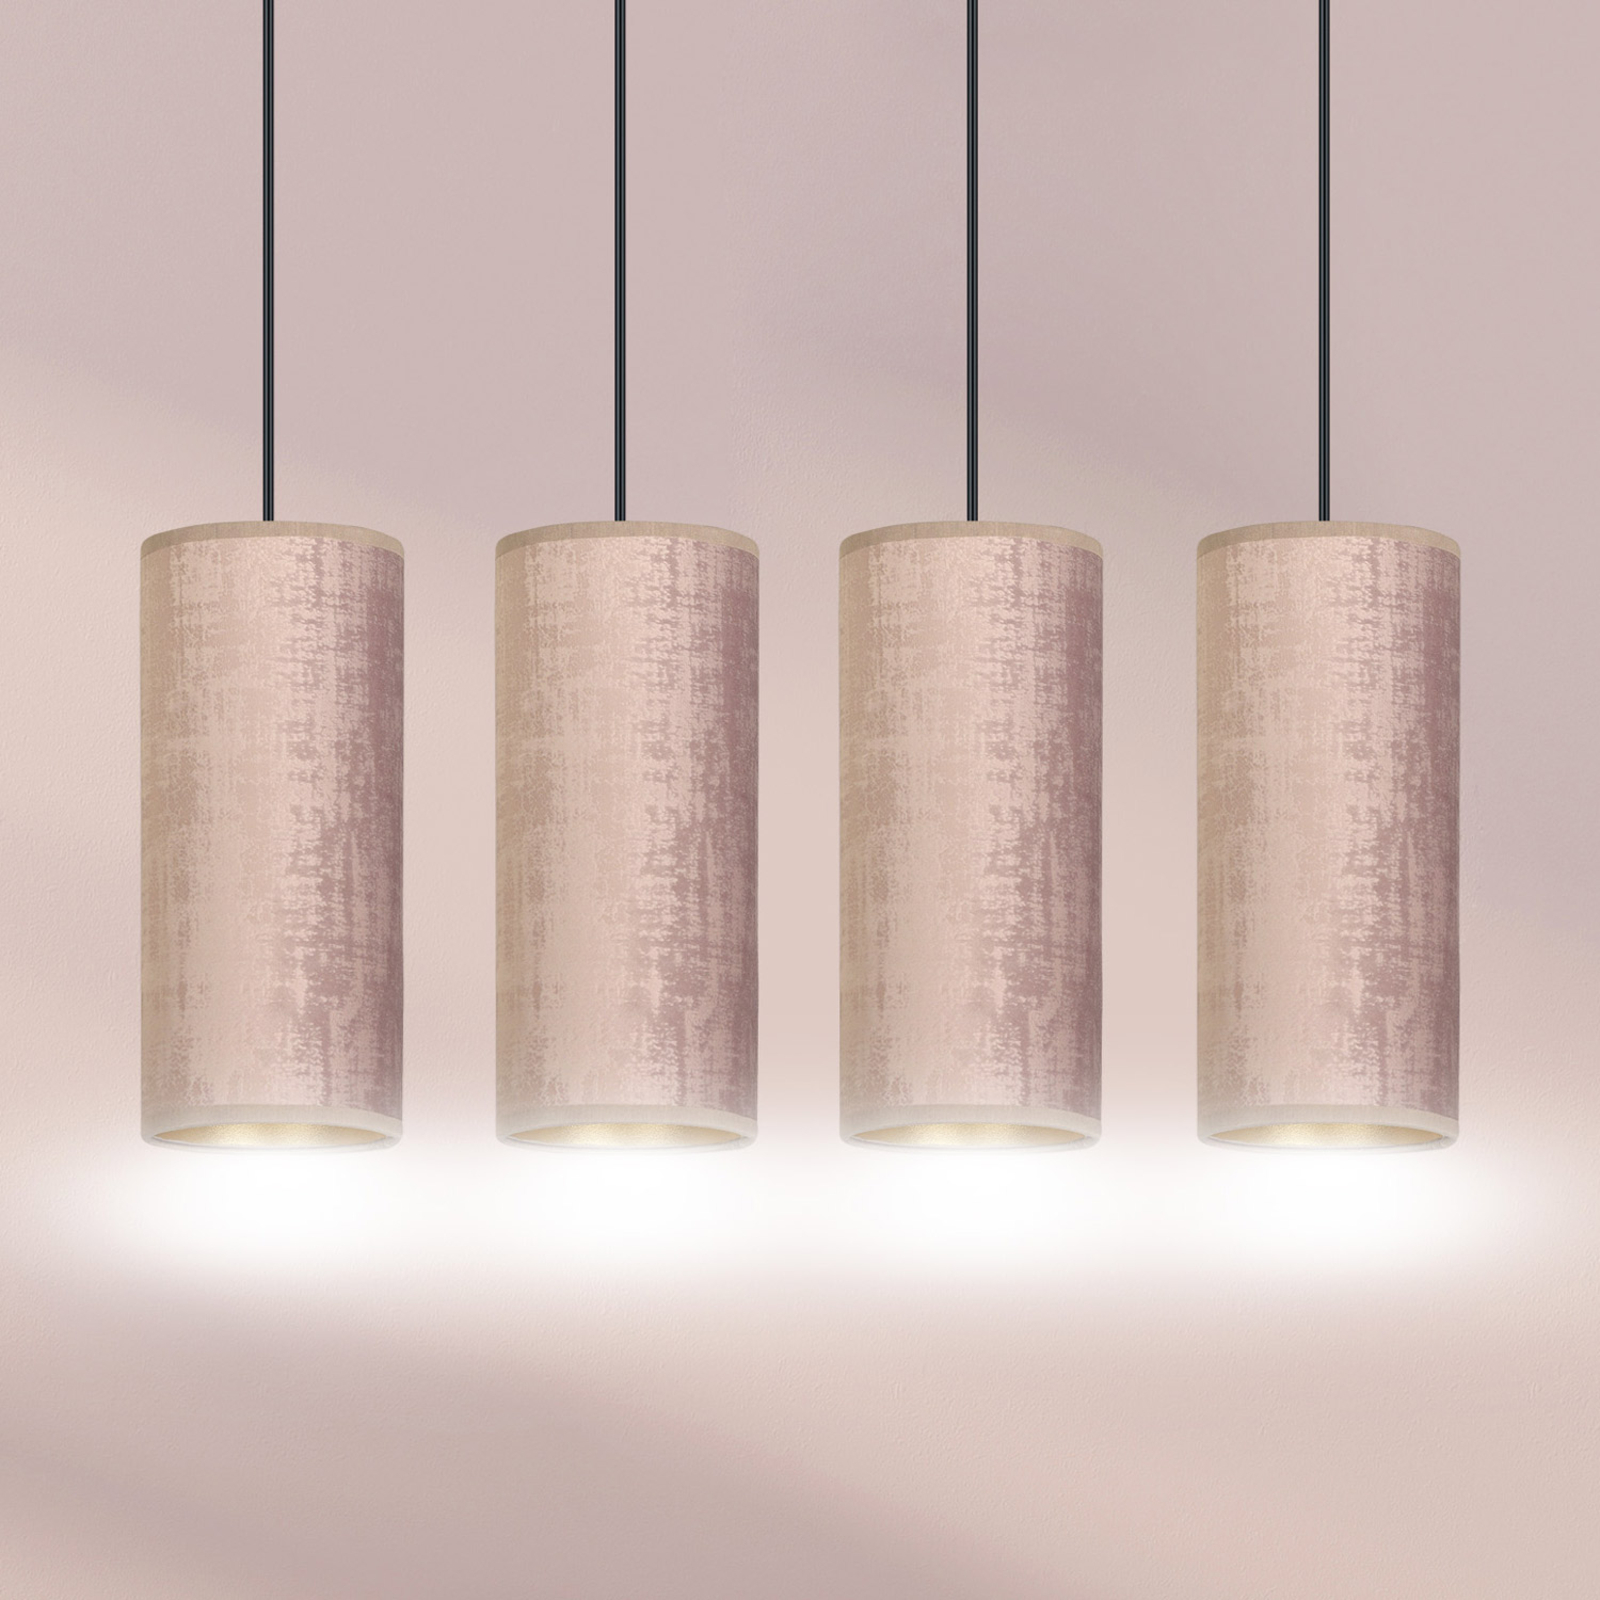 Hanglamp Joni, 4-lamps lang, rosé-goud | Lampen24.be